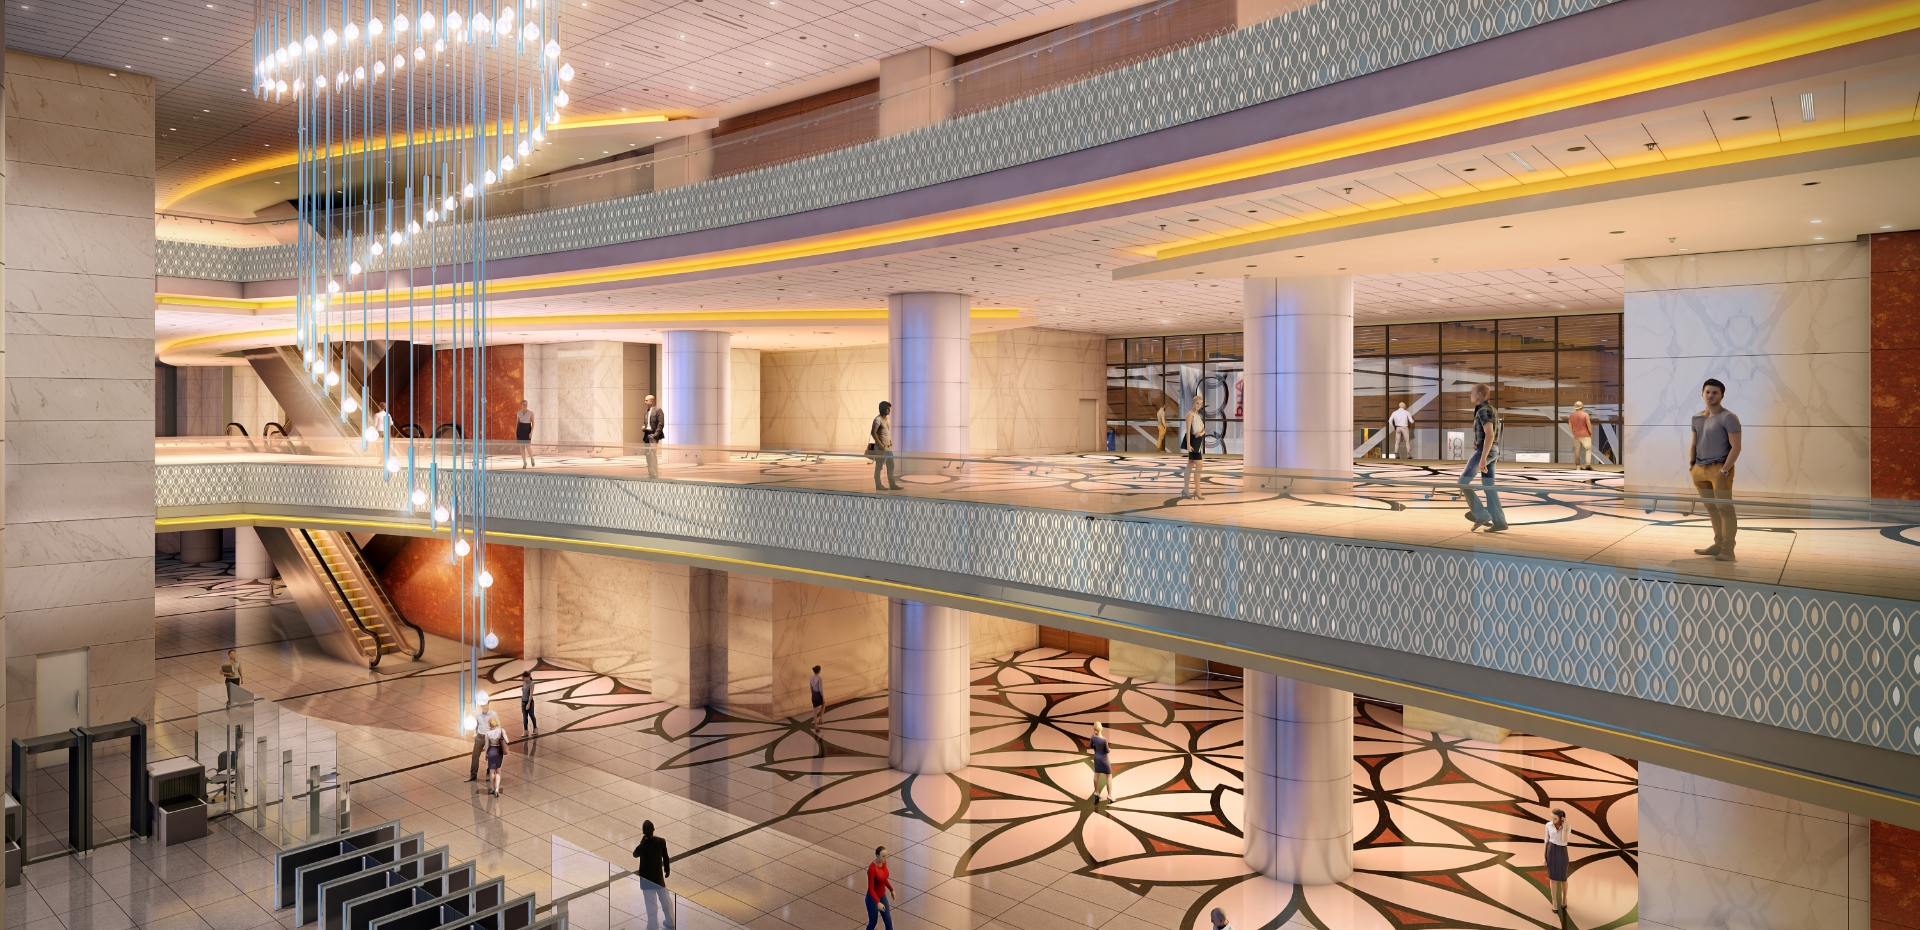 Nita Ambani at Jio World Plaza launch: 'Hope it become best mall in world'  - The Economic Times Video